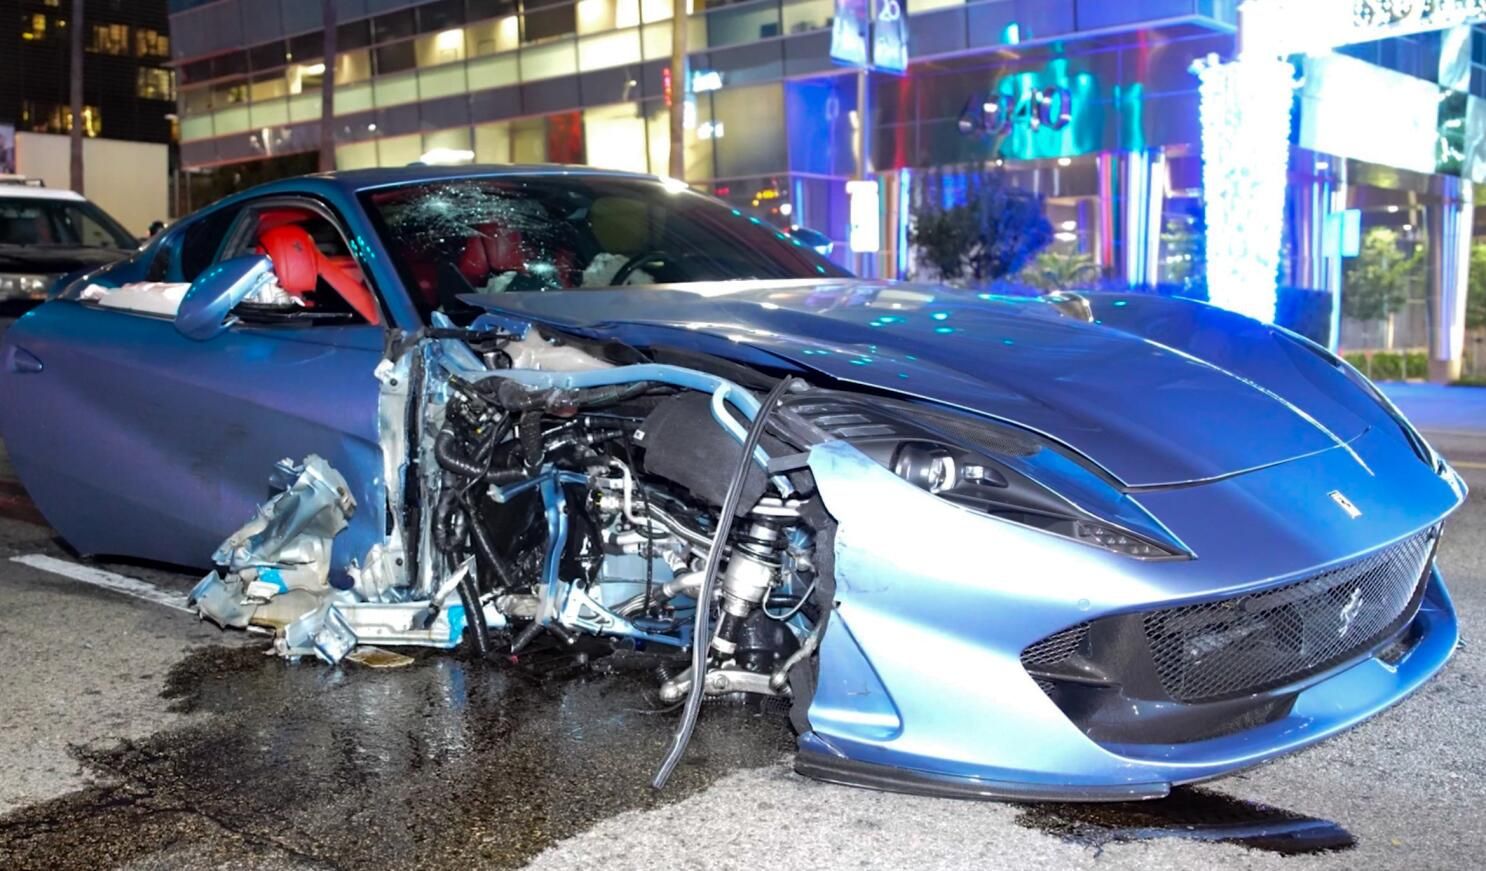 Michael B. Jordan’s Wrecked Ferrari From Hollywood Street Racing Crash Up For Auction